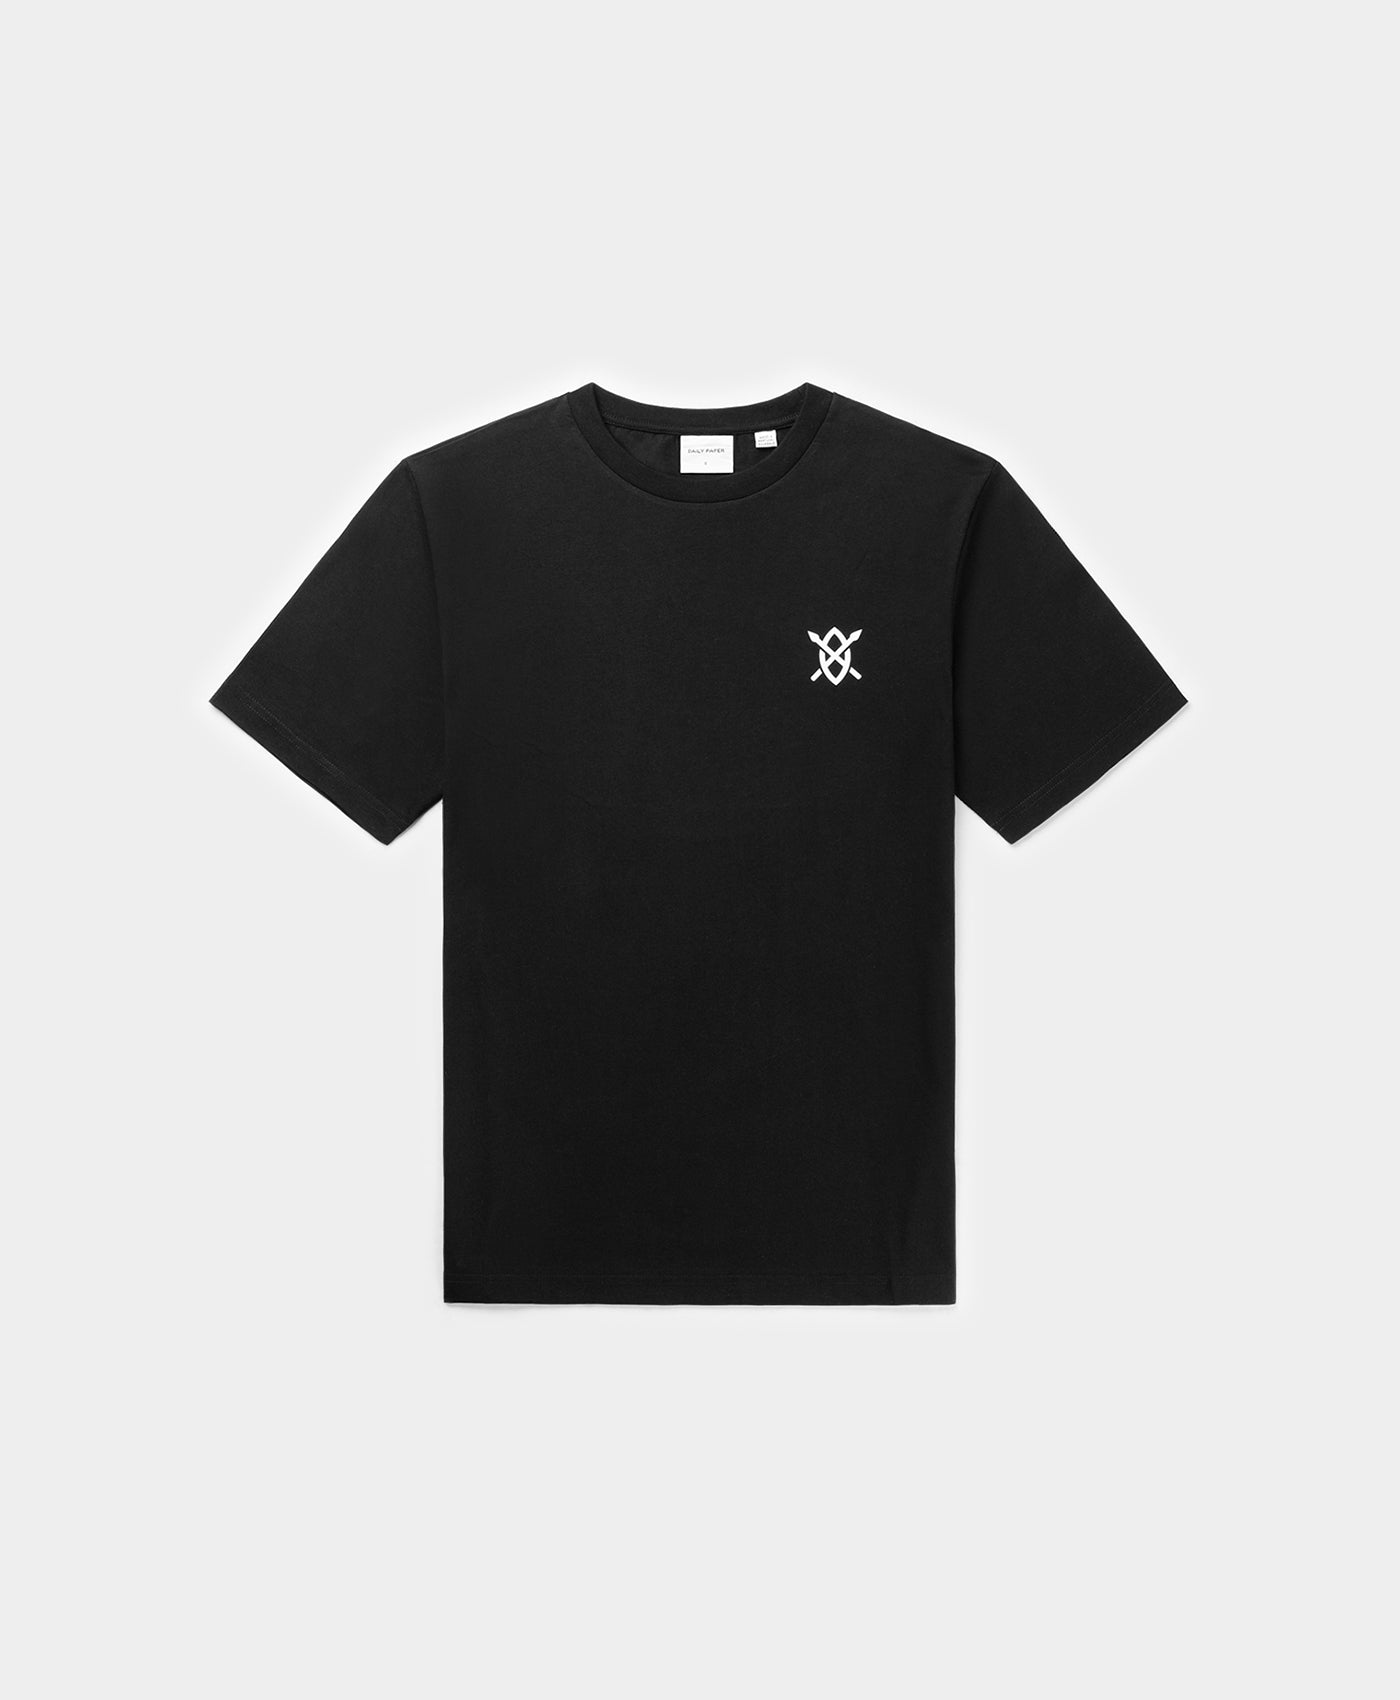 DP - Black NY Store T-Shirt - Packshot - Rear